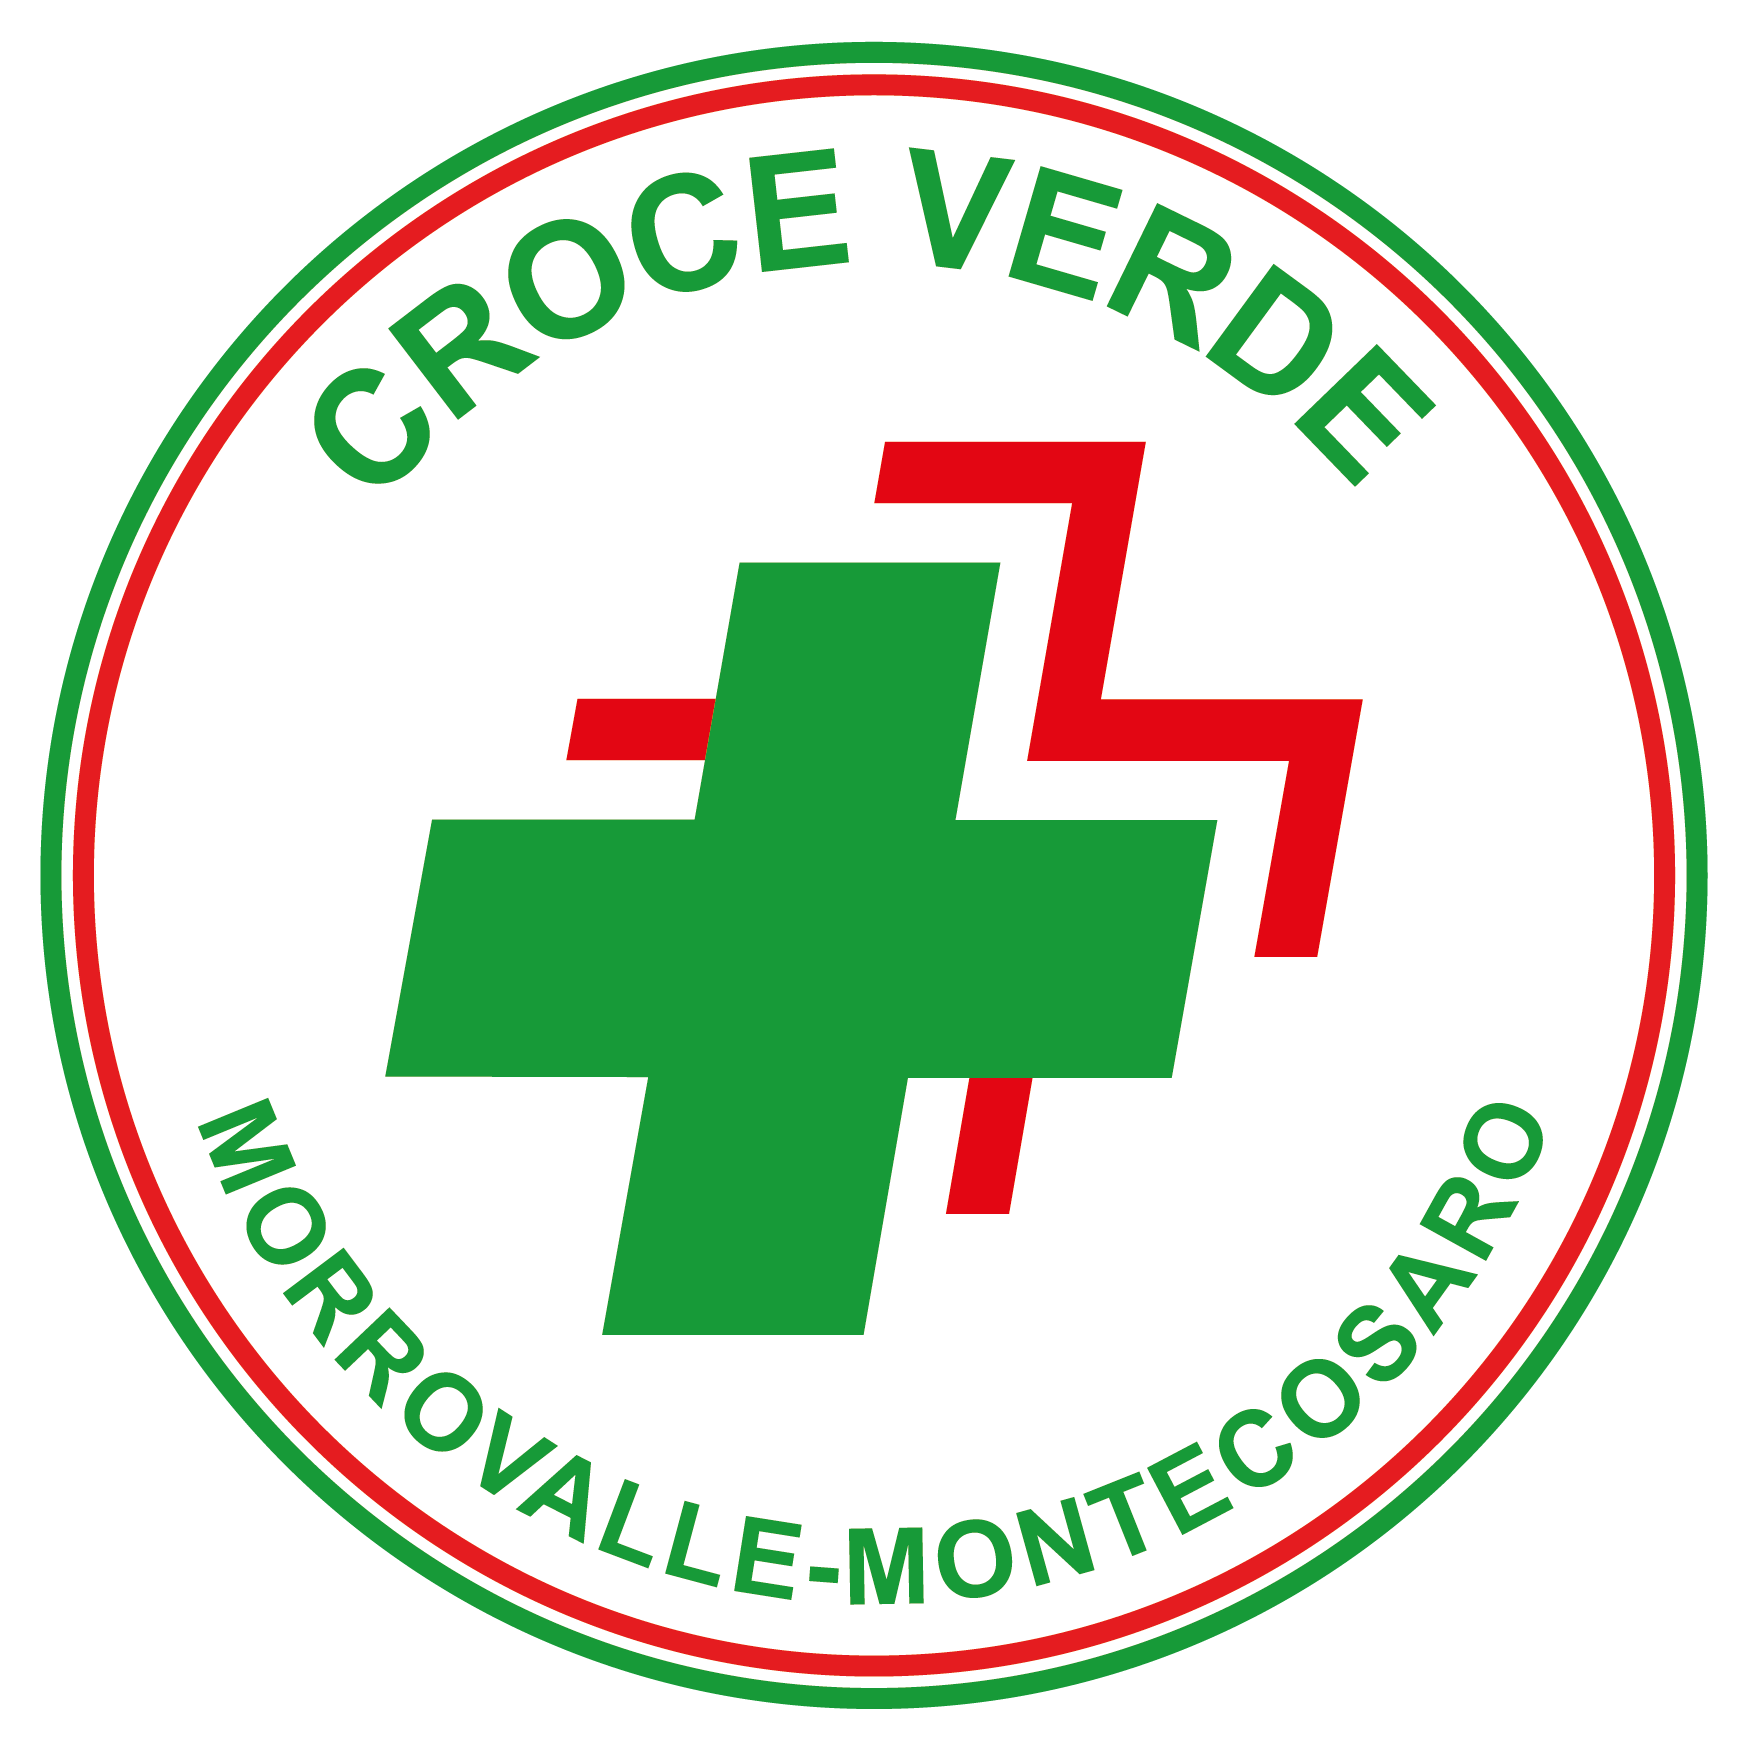 Croce Verde Morrovalle-Montecosaro